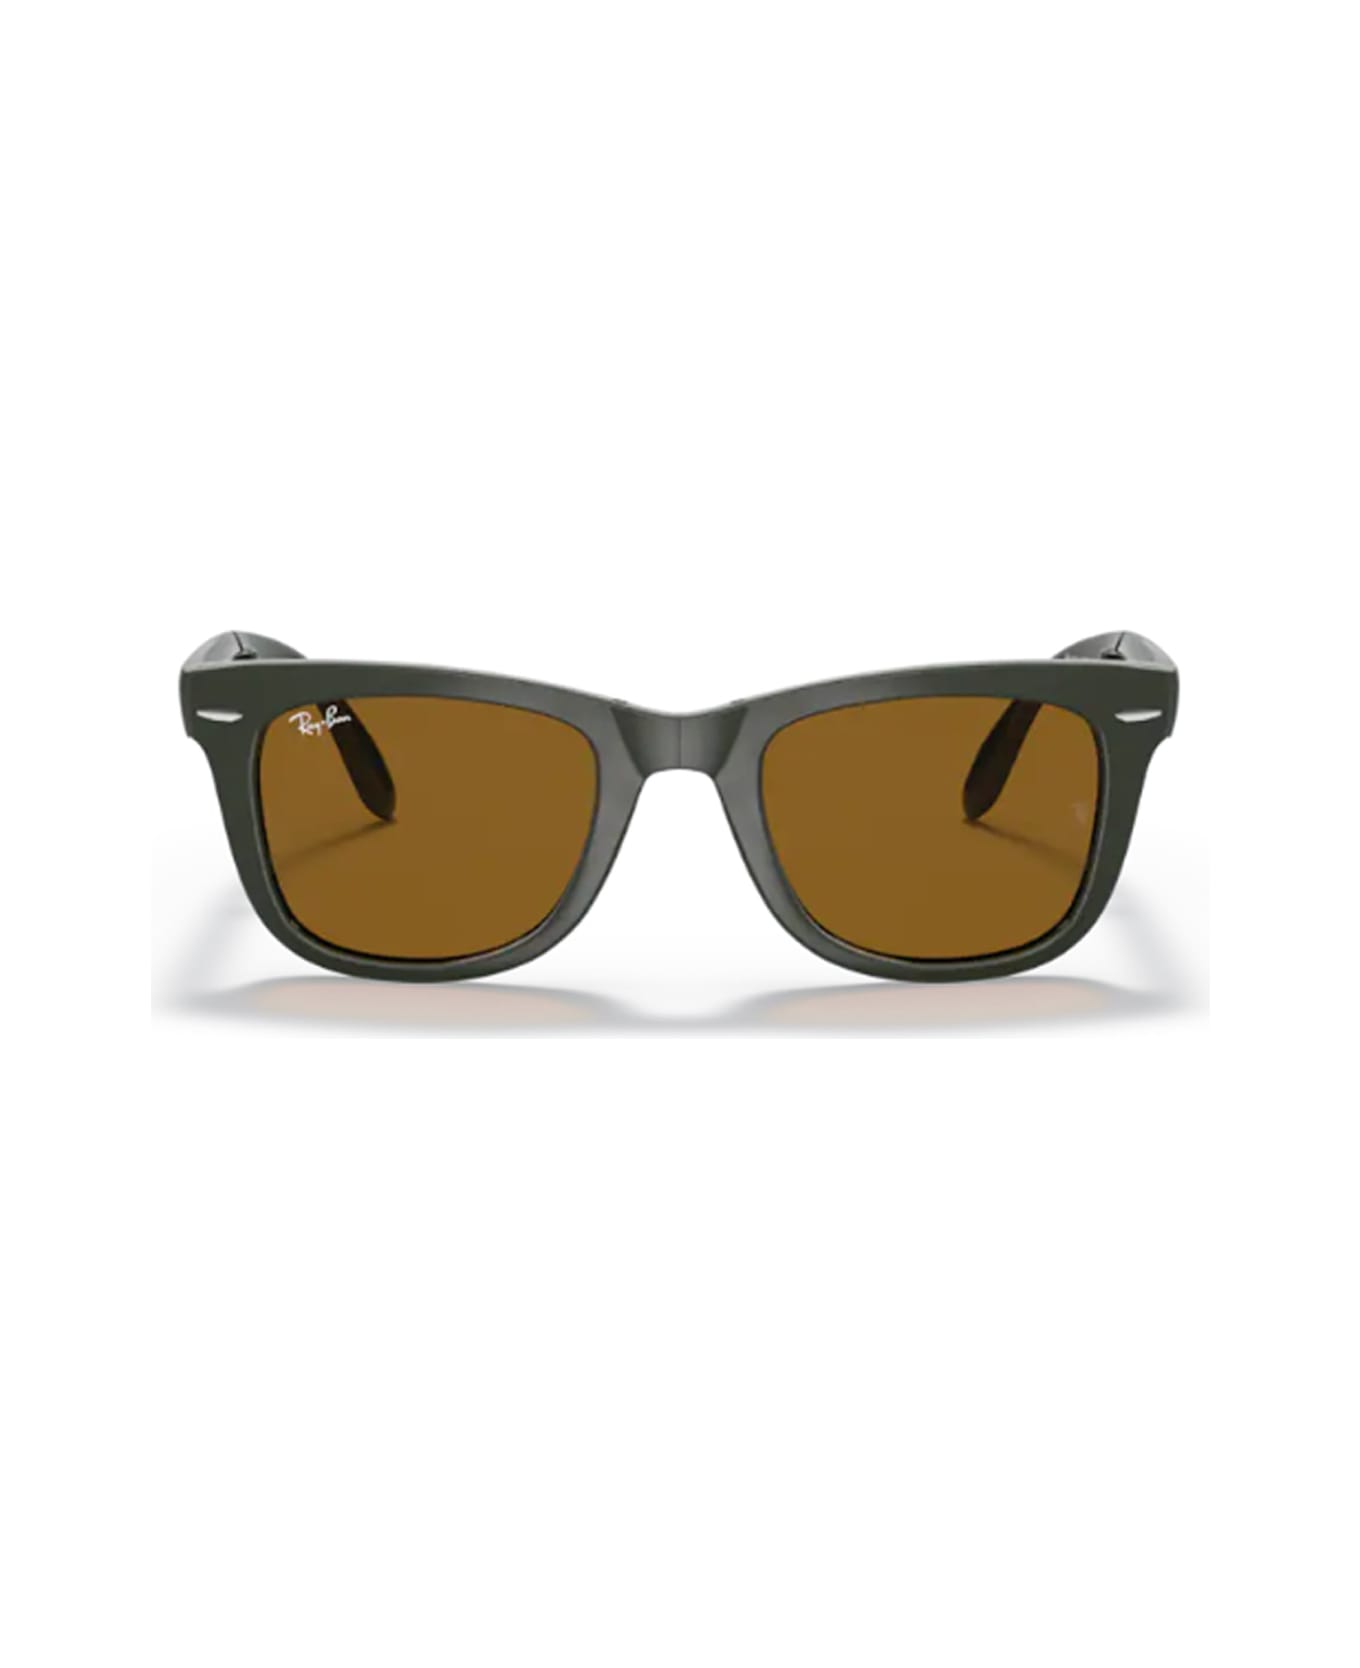 Ray-Ban Folding Wayfarer Rb4105 Sunglasses - Verde サングラス